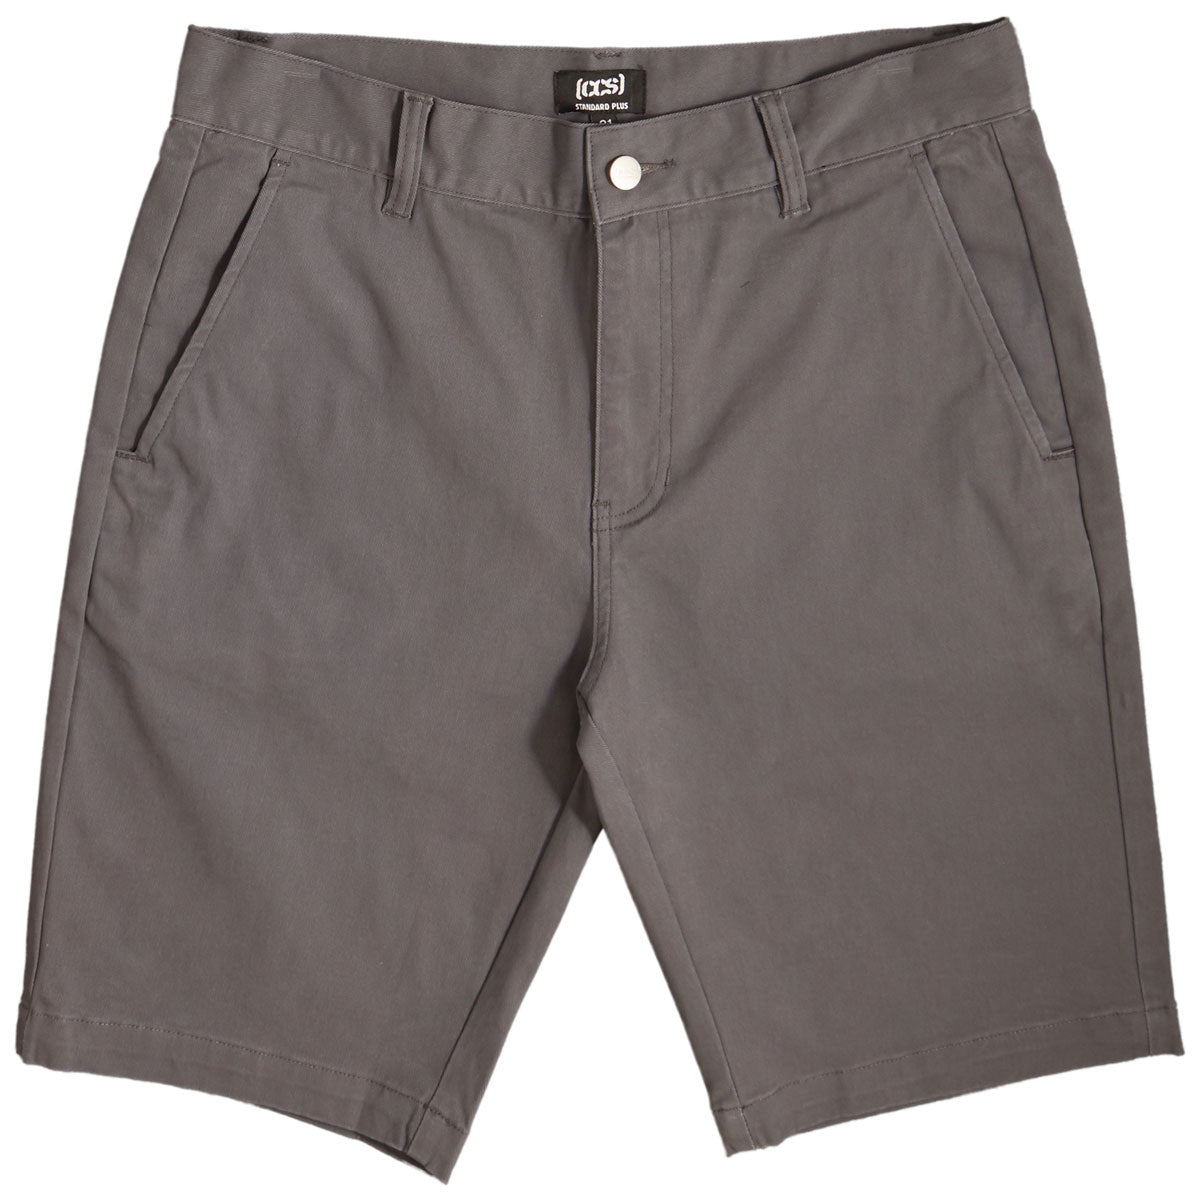 CCS Standard Plus Chino Shorts - Grey image 5